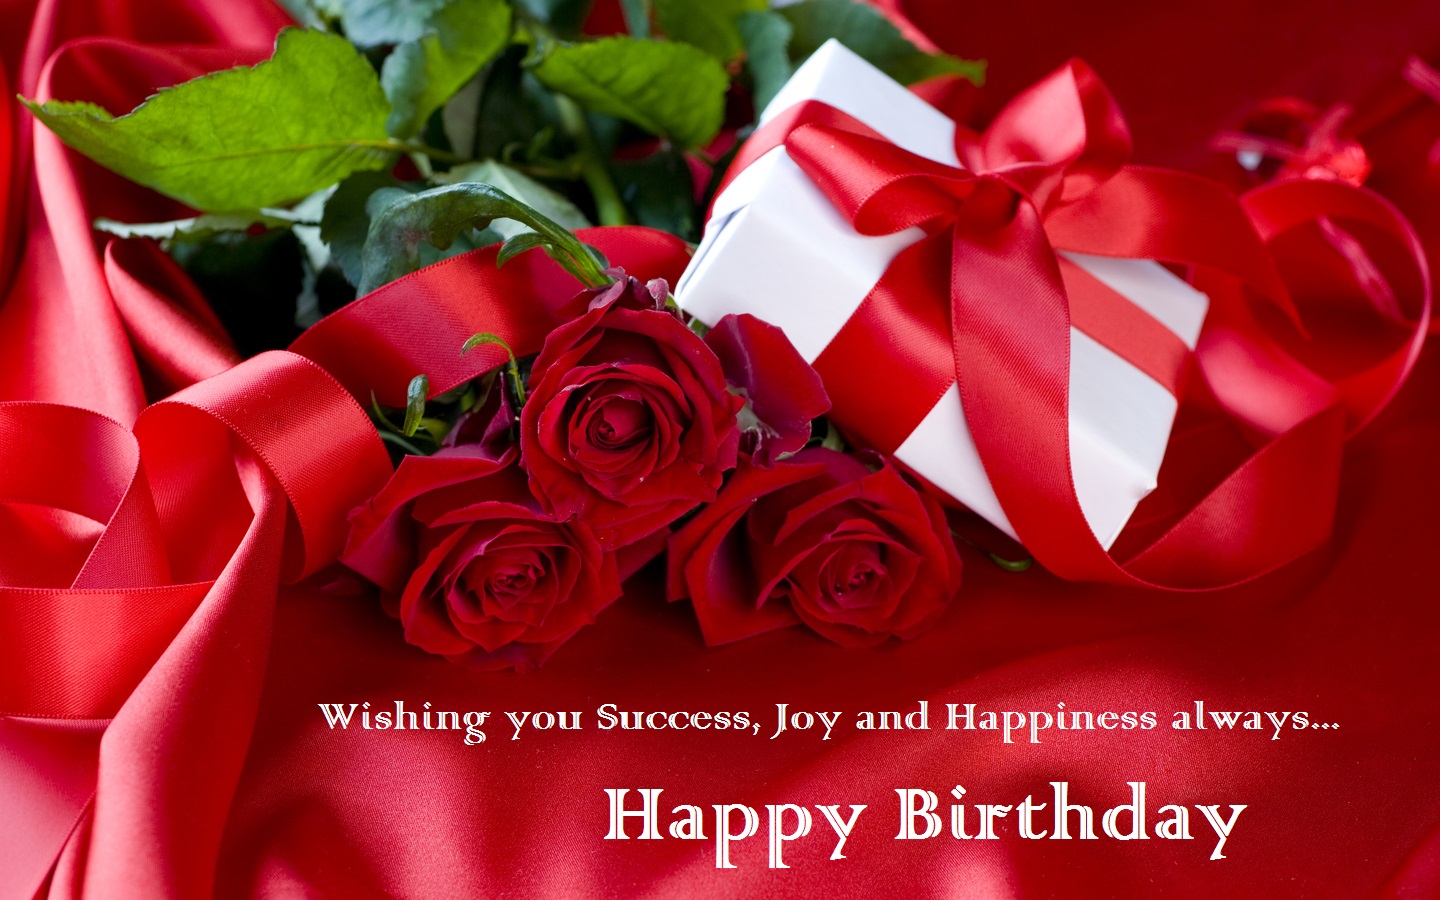 http://4.bp.blogspot.com/-DWOvft6r5qY/UdEdRi9ODKI/AAAAAAAAR4k/4kved27CJtQ/s1440/Happy+Birthday+Gifts+Cards+-+94.jpg